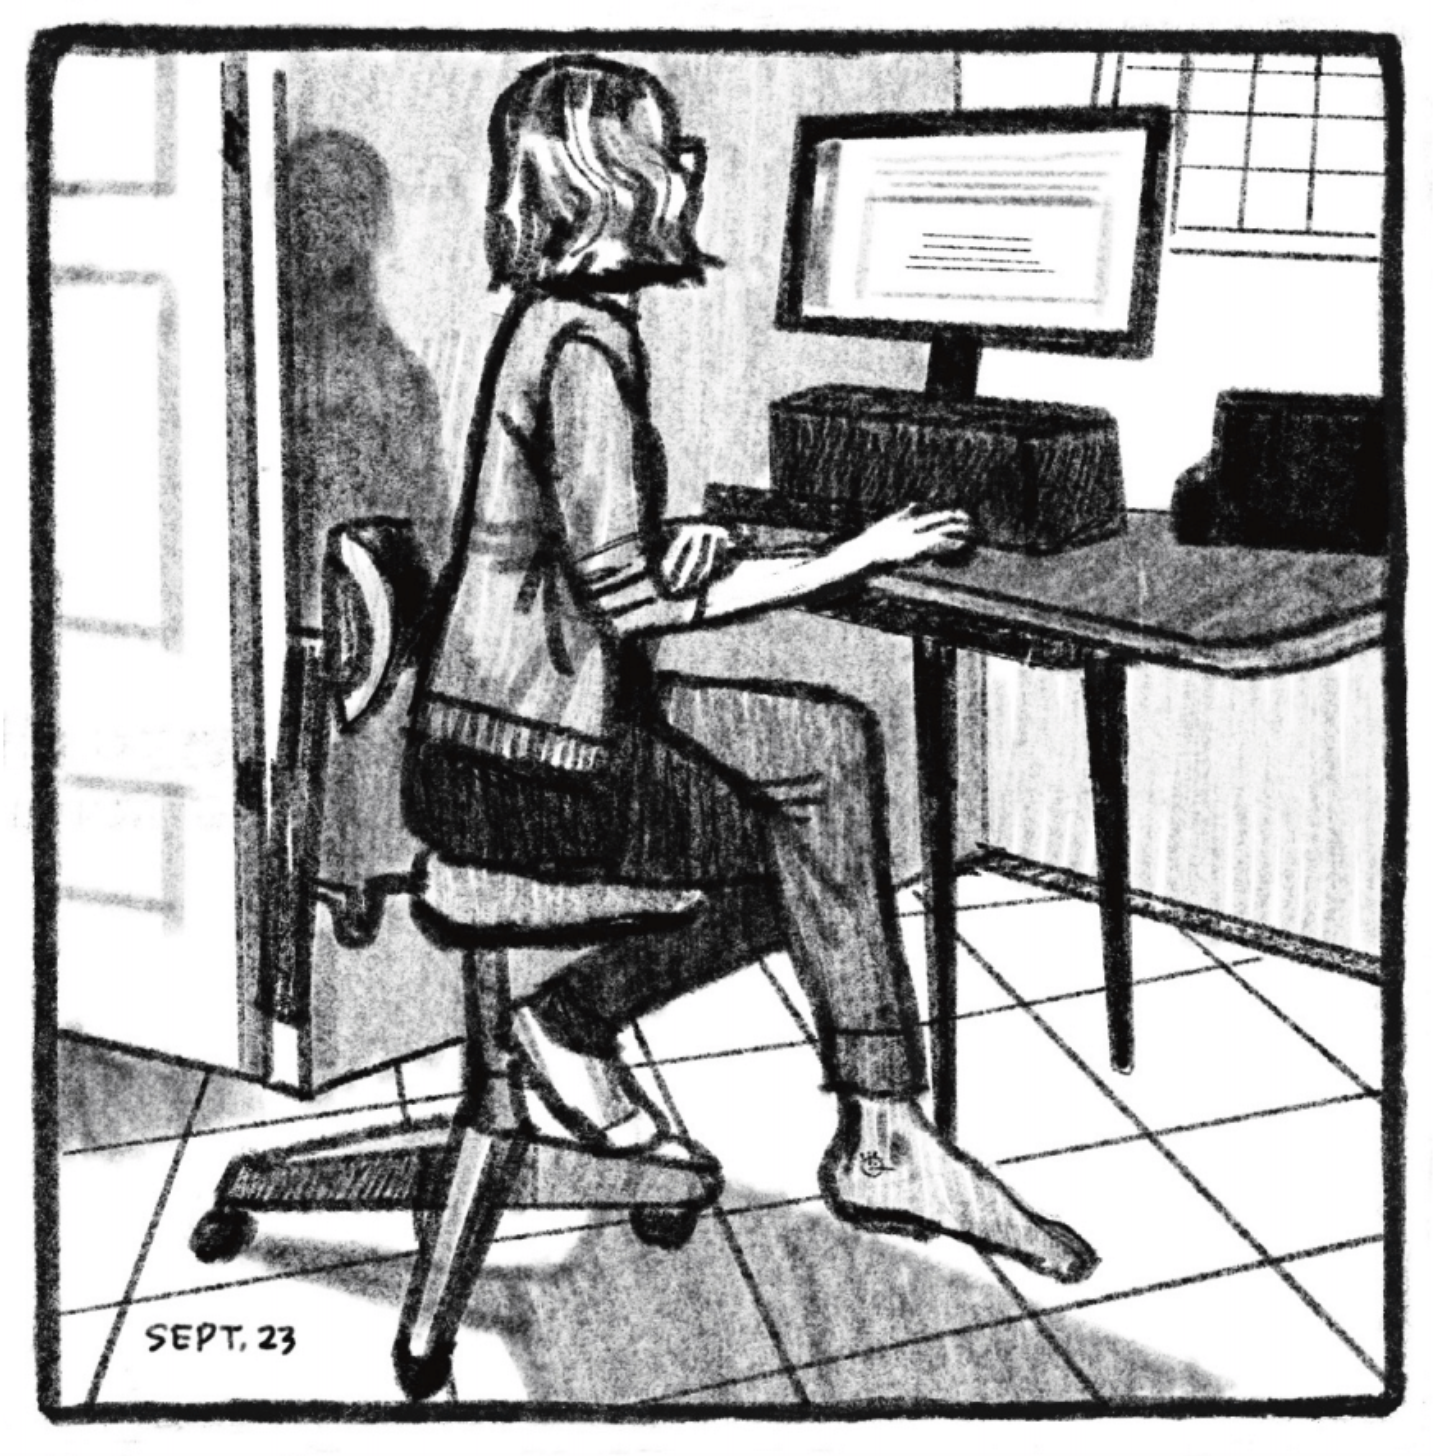 Kim sits at a desk in an office swivel chair, working on her desktop computer. â€œSeptember 23.â€